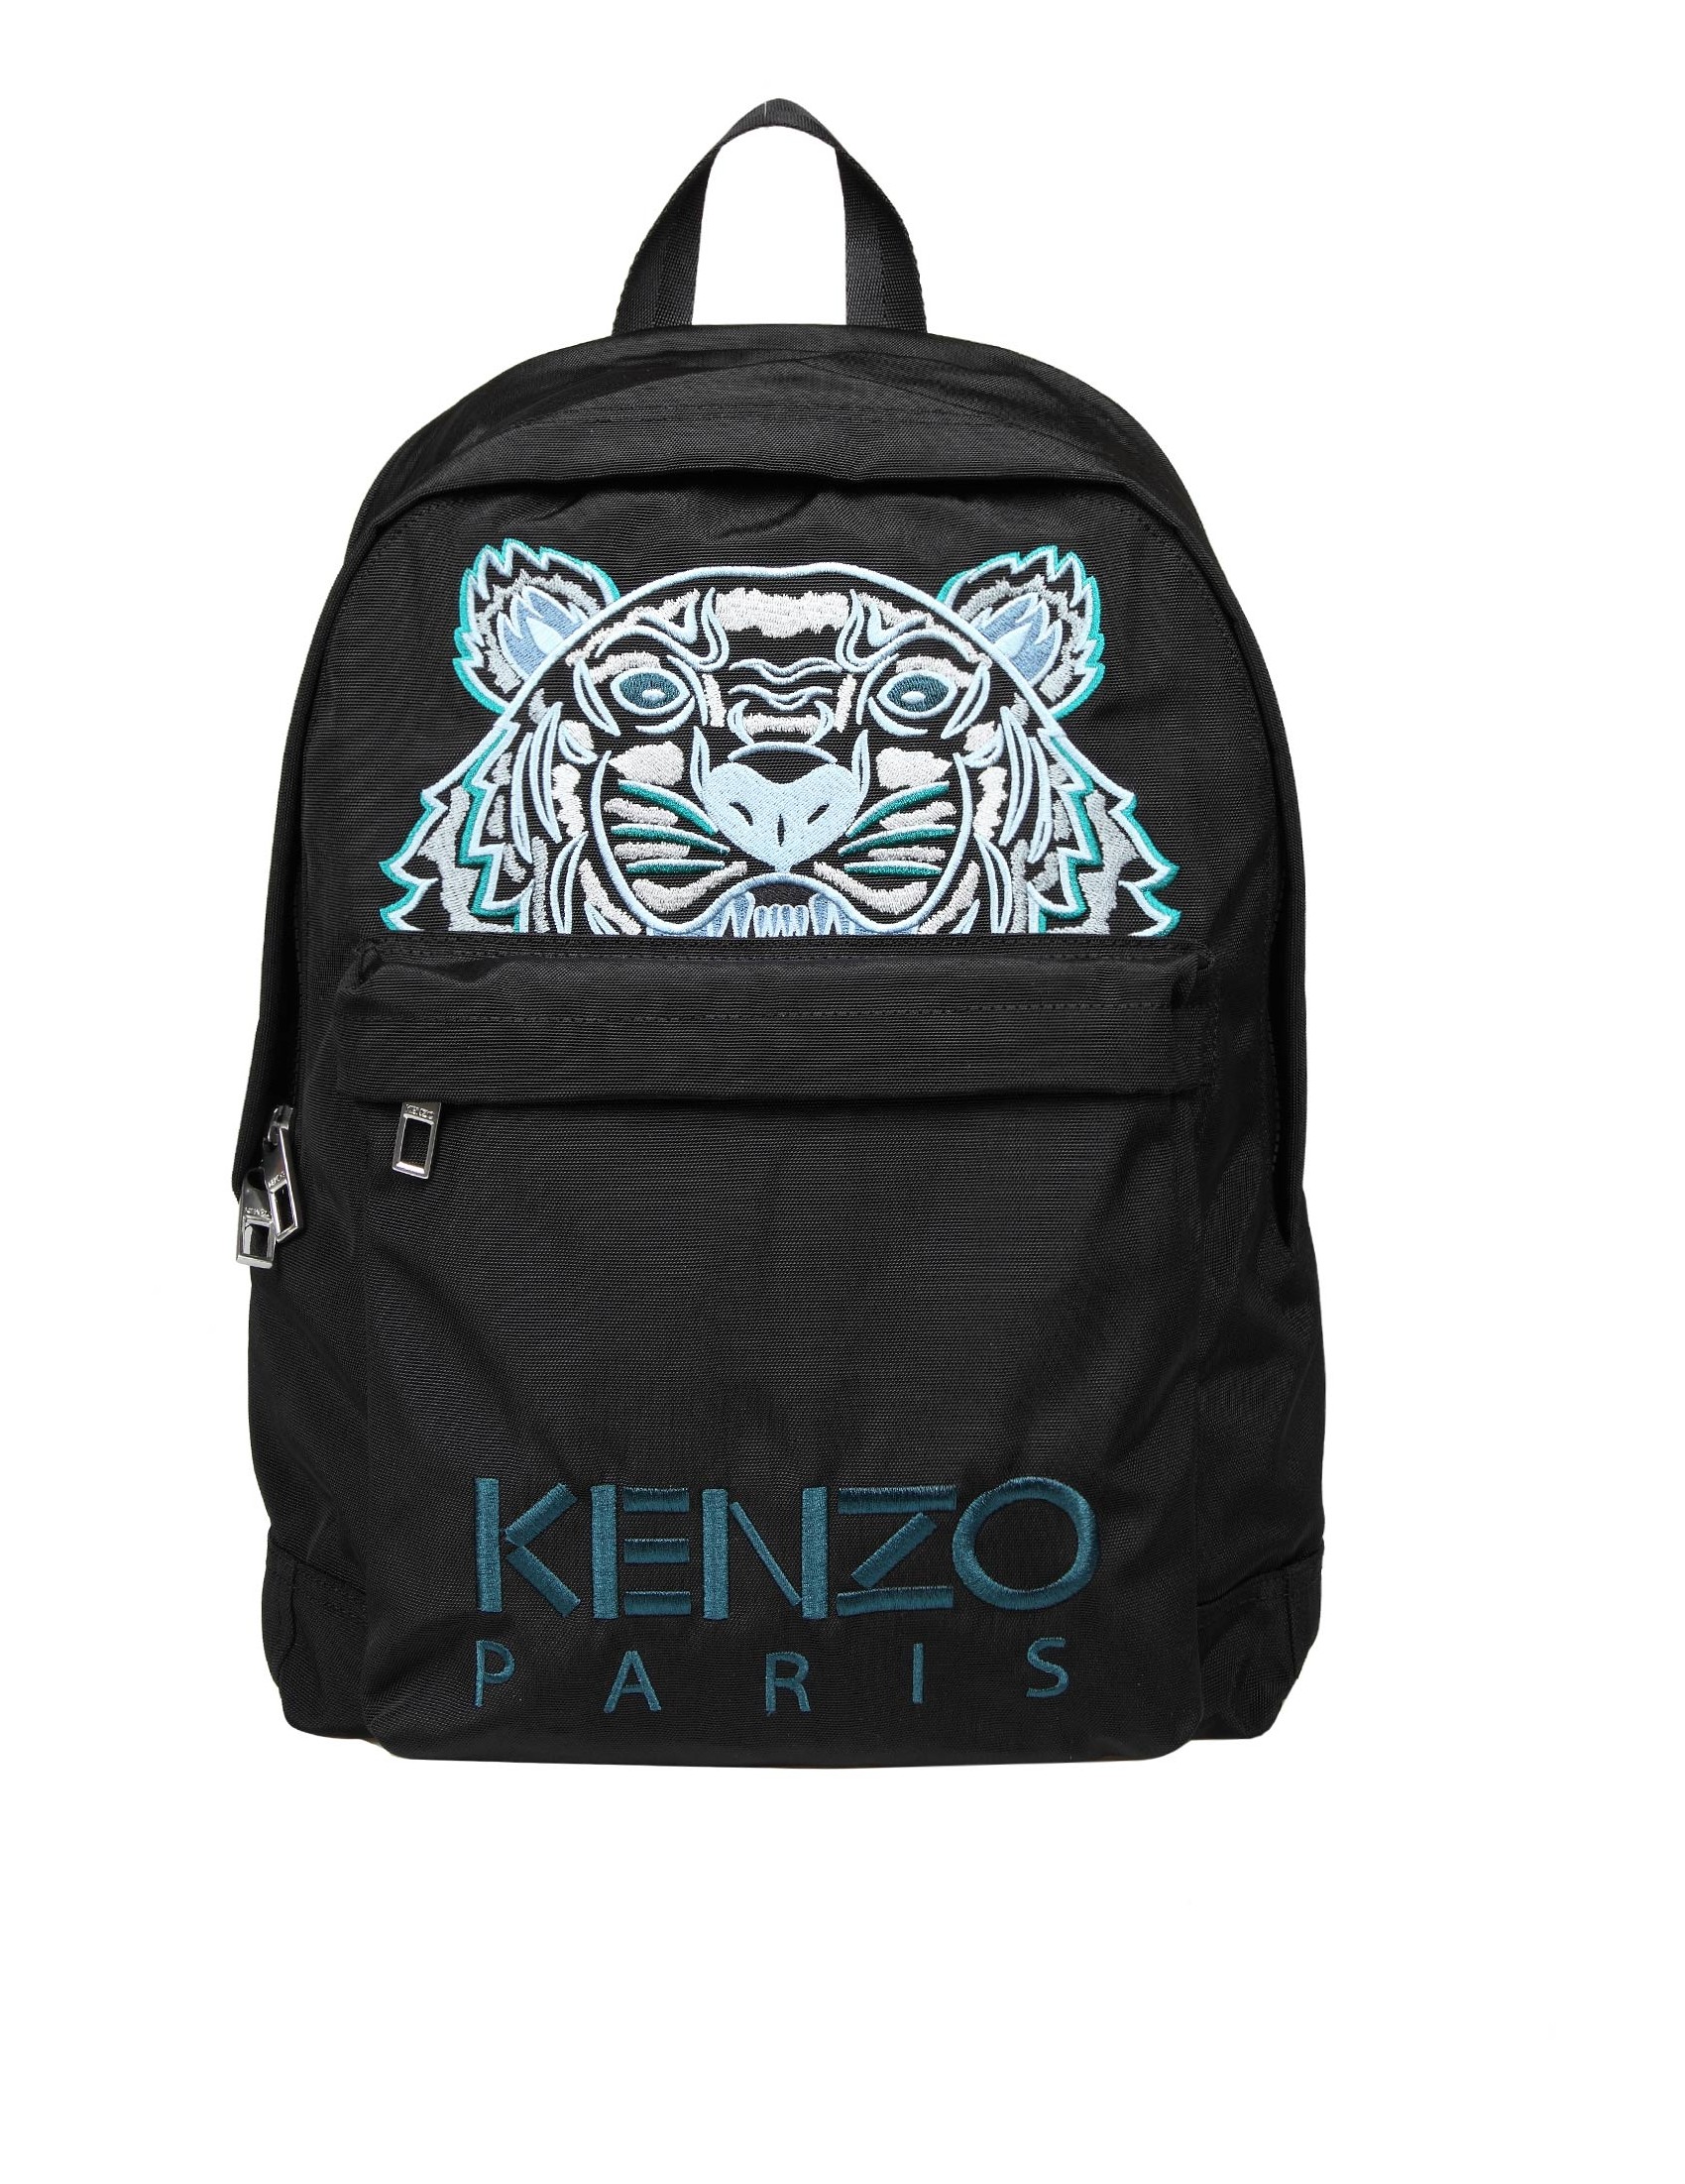 kenzo backpack women's